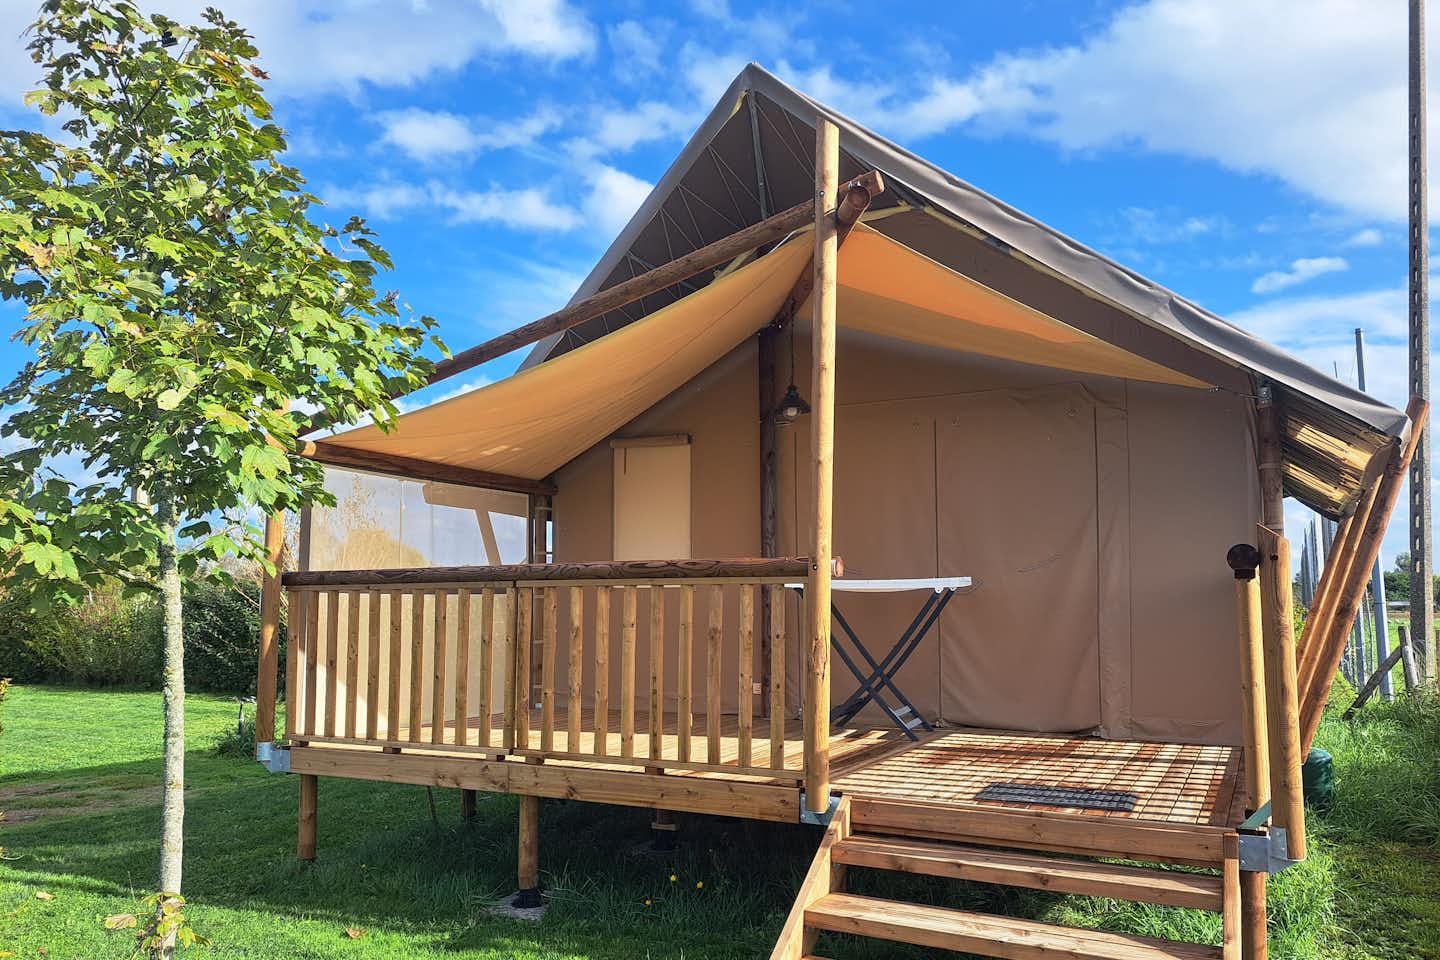 Camping Loire et Châteaux - Safarizelt-Mietunterkunft mit Privatsanitär